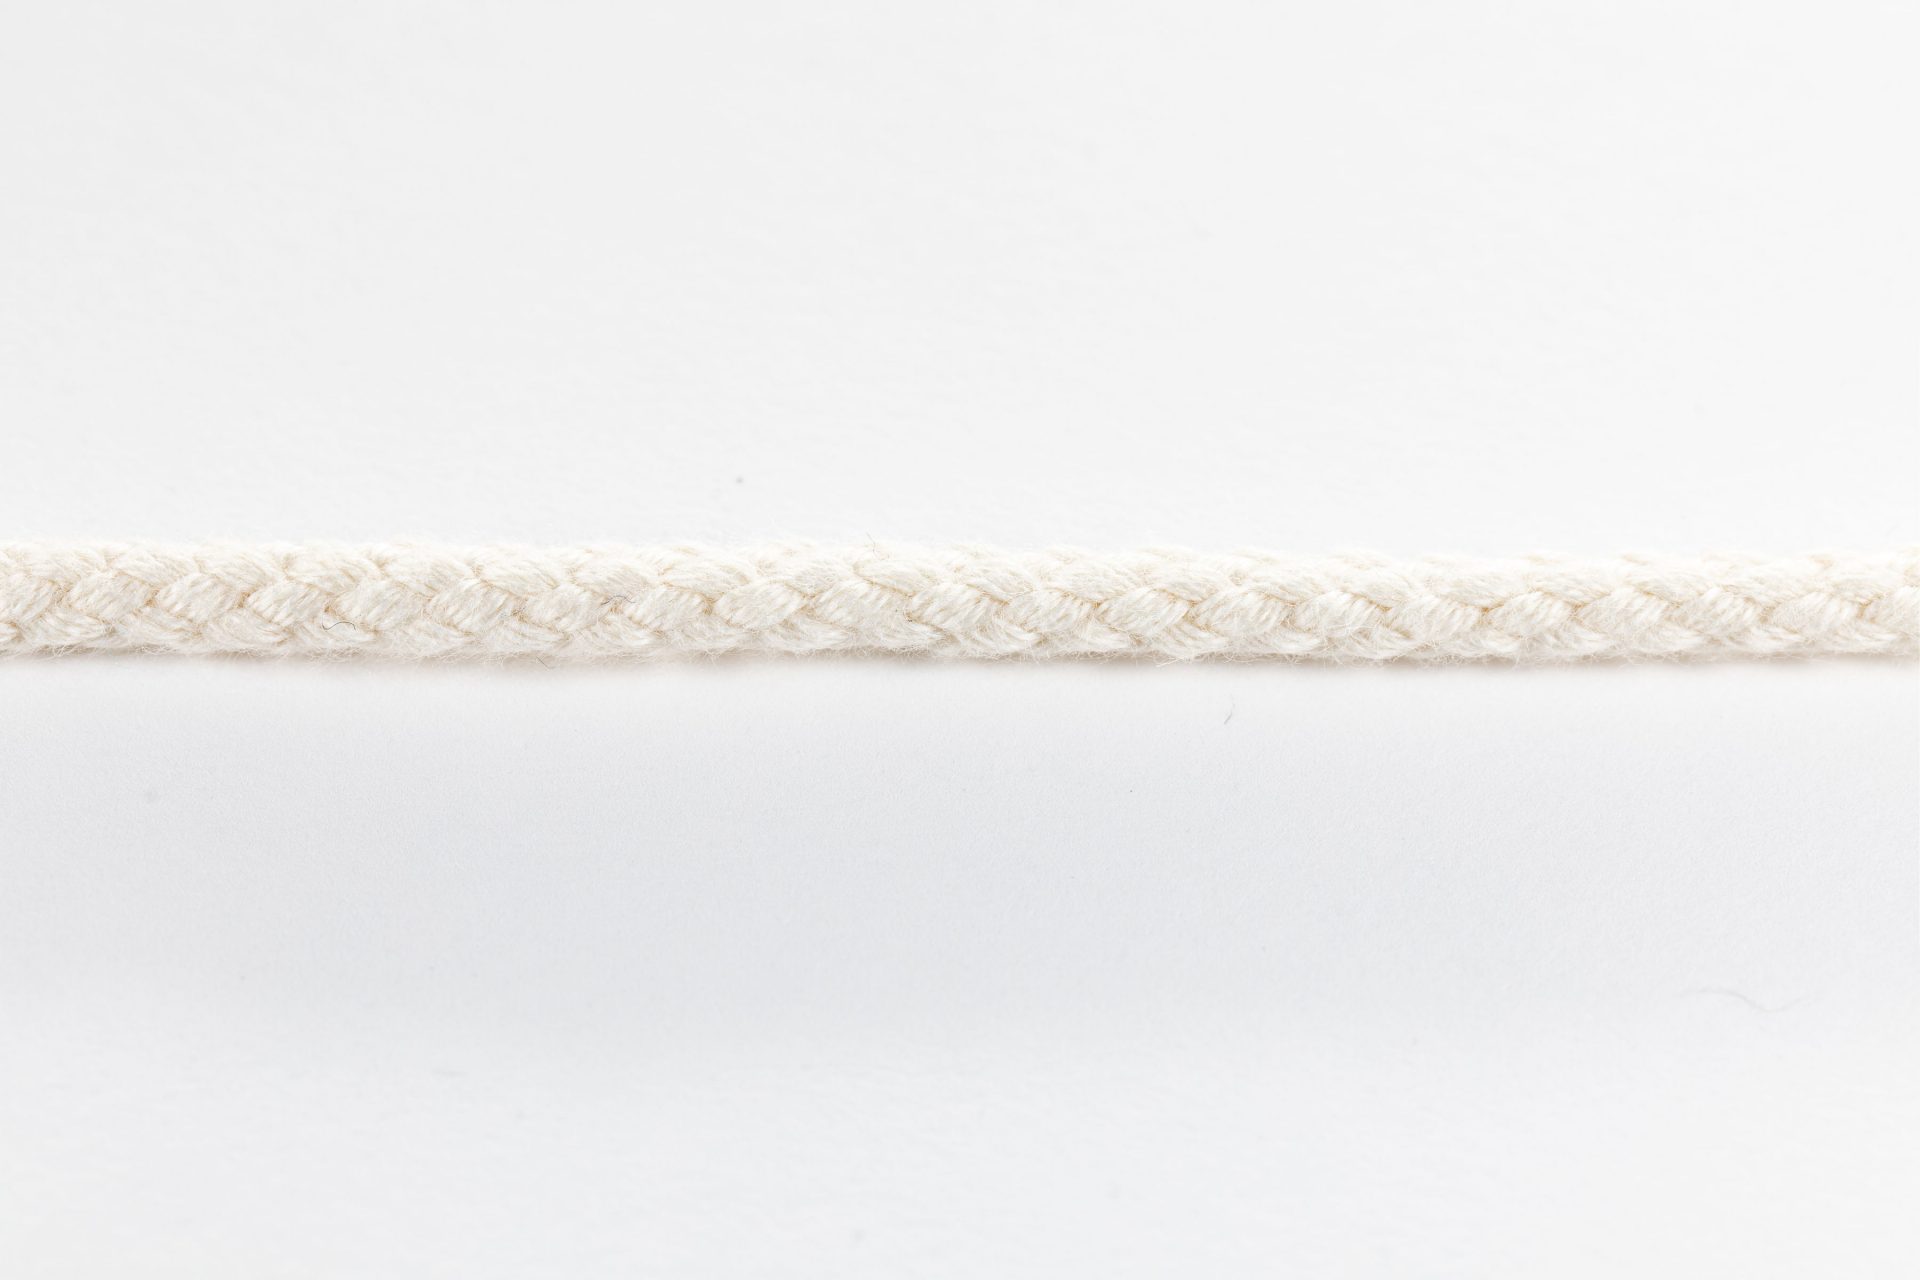 SL3 -5mm Raw cotton cord